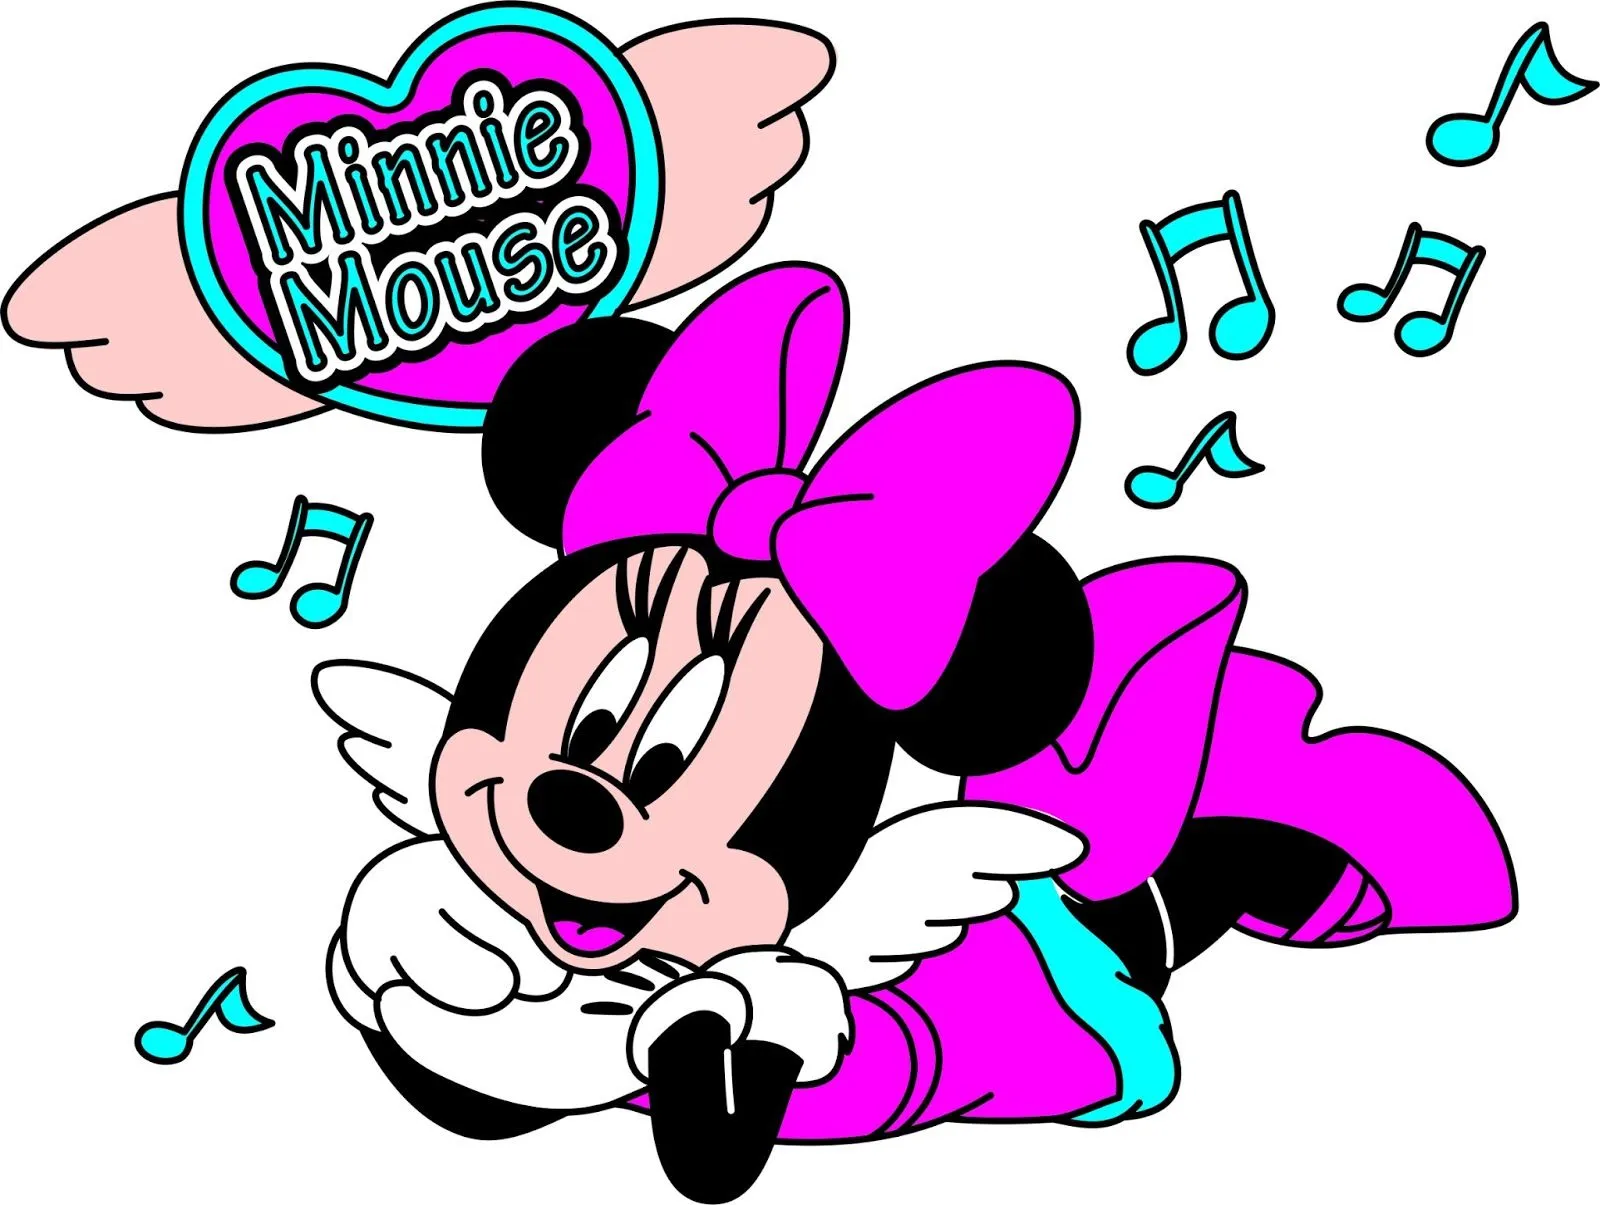 Descargar imágenes de Minnie Mouse - Imagui